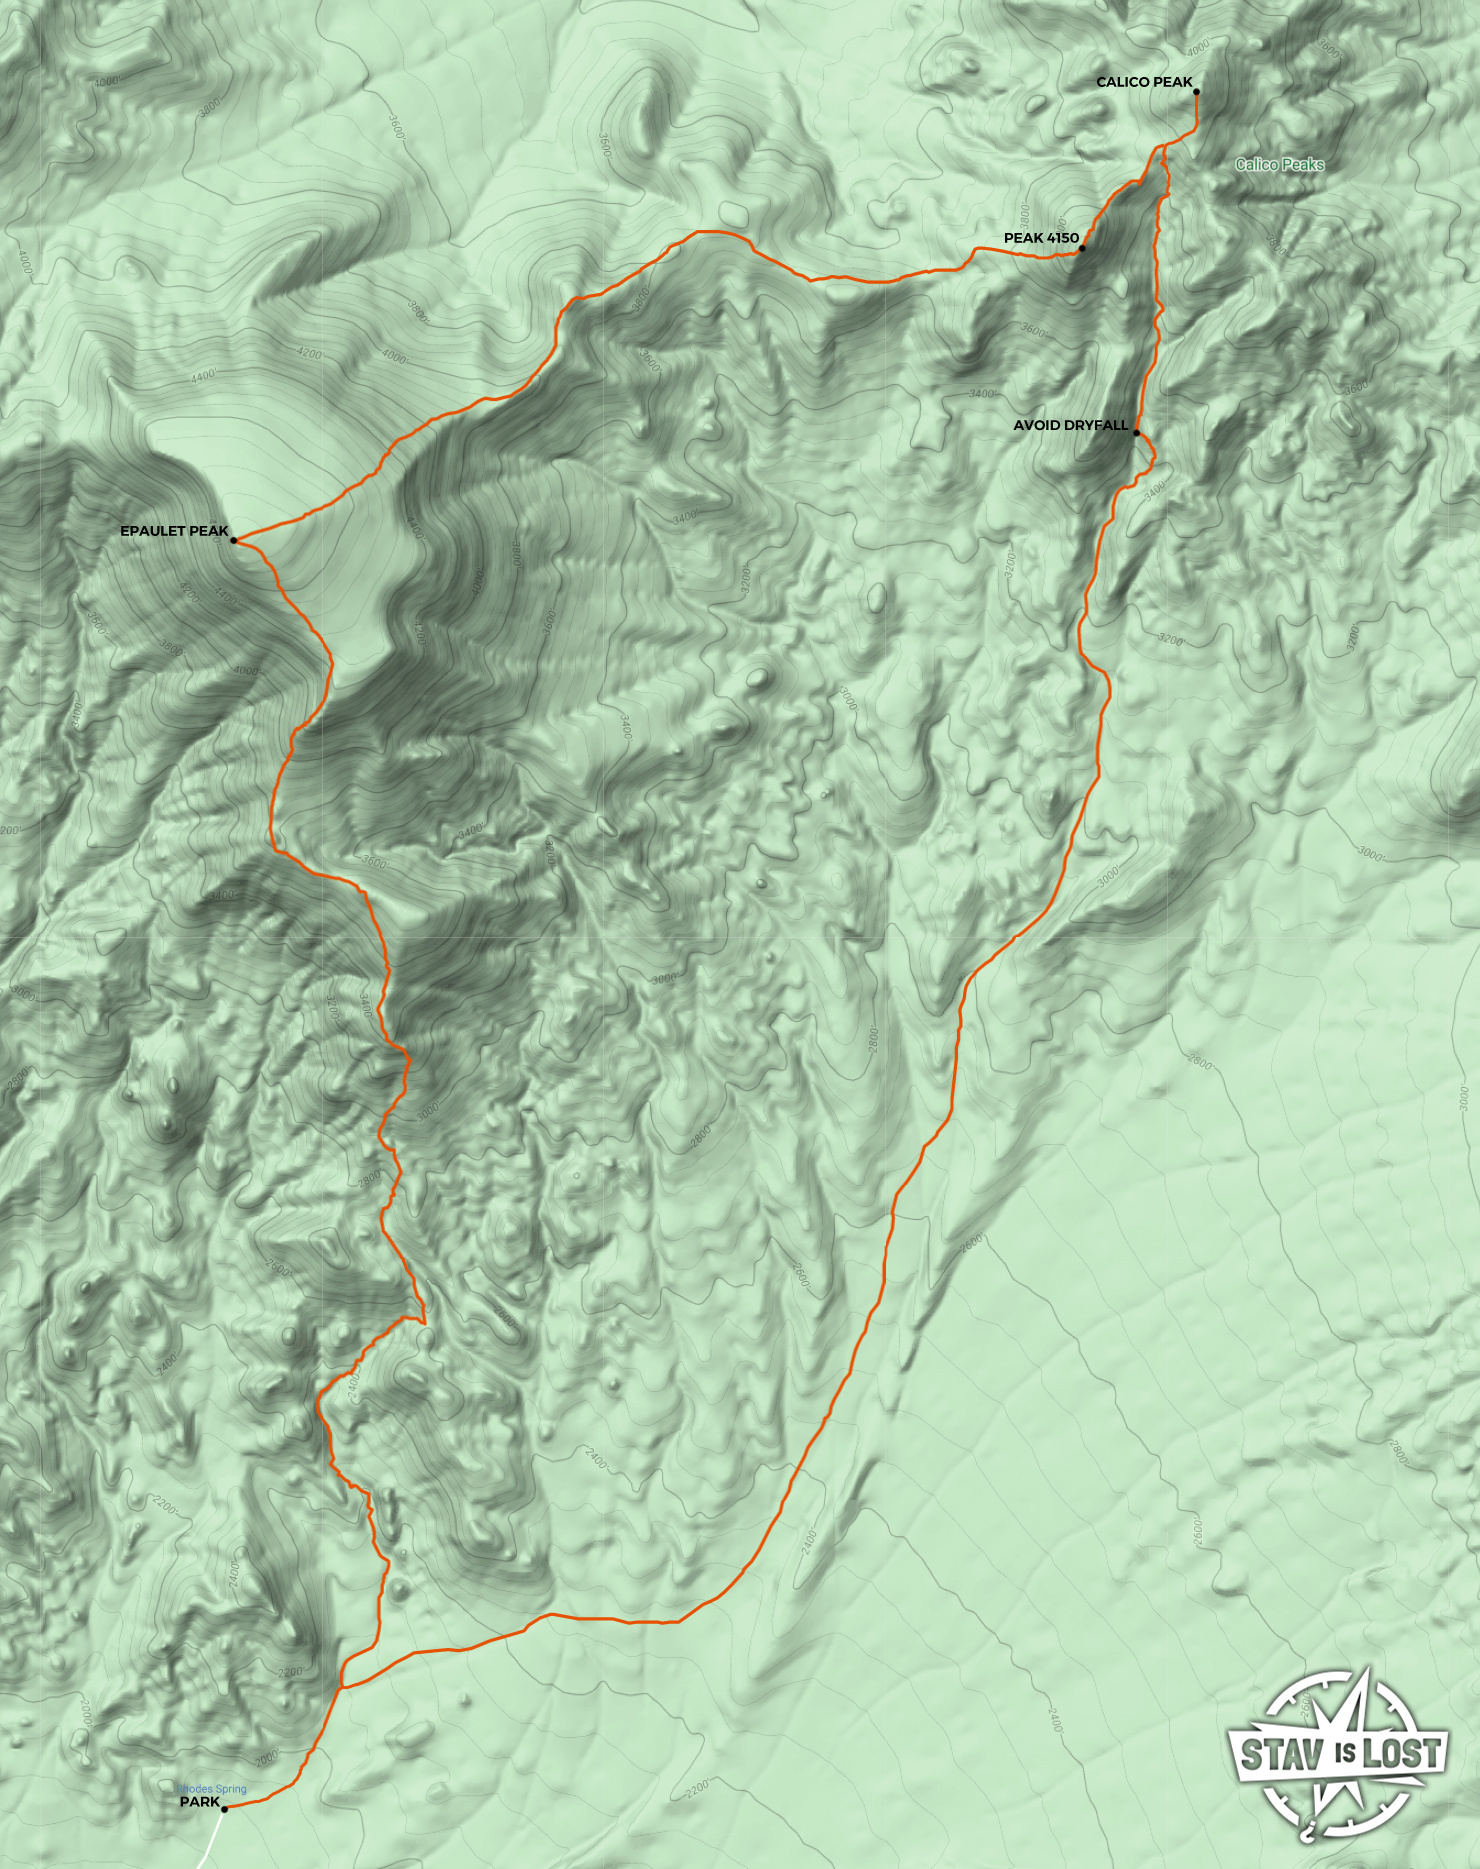 map for Epaulet Peak and Calico Peak by stav is lost